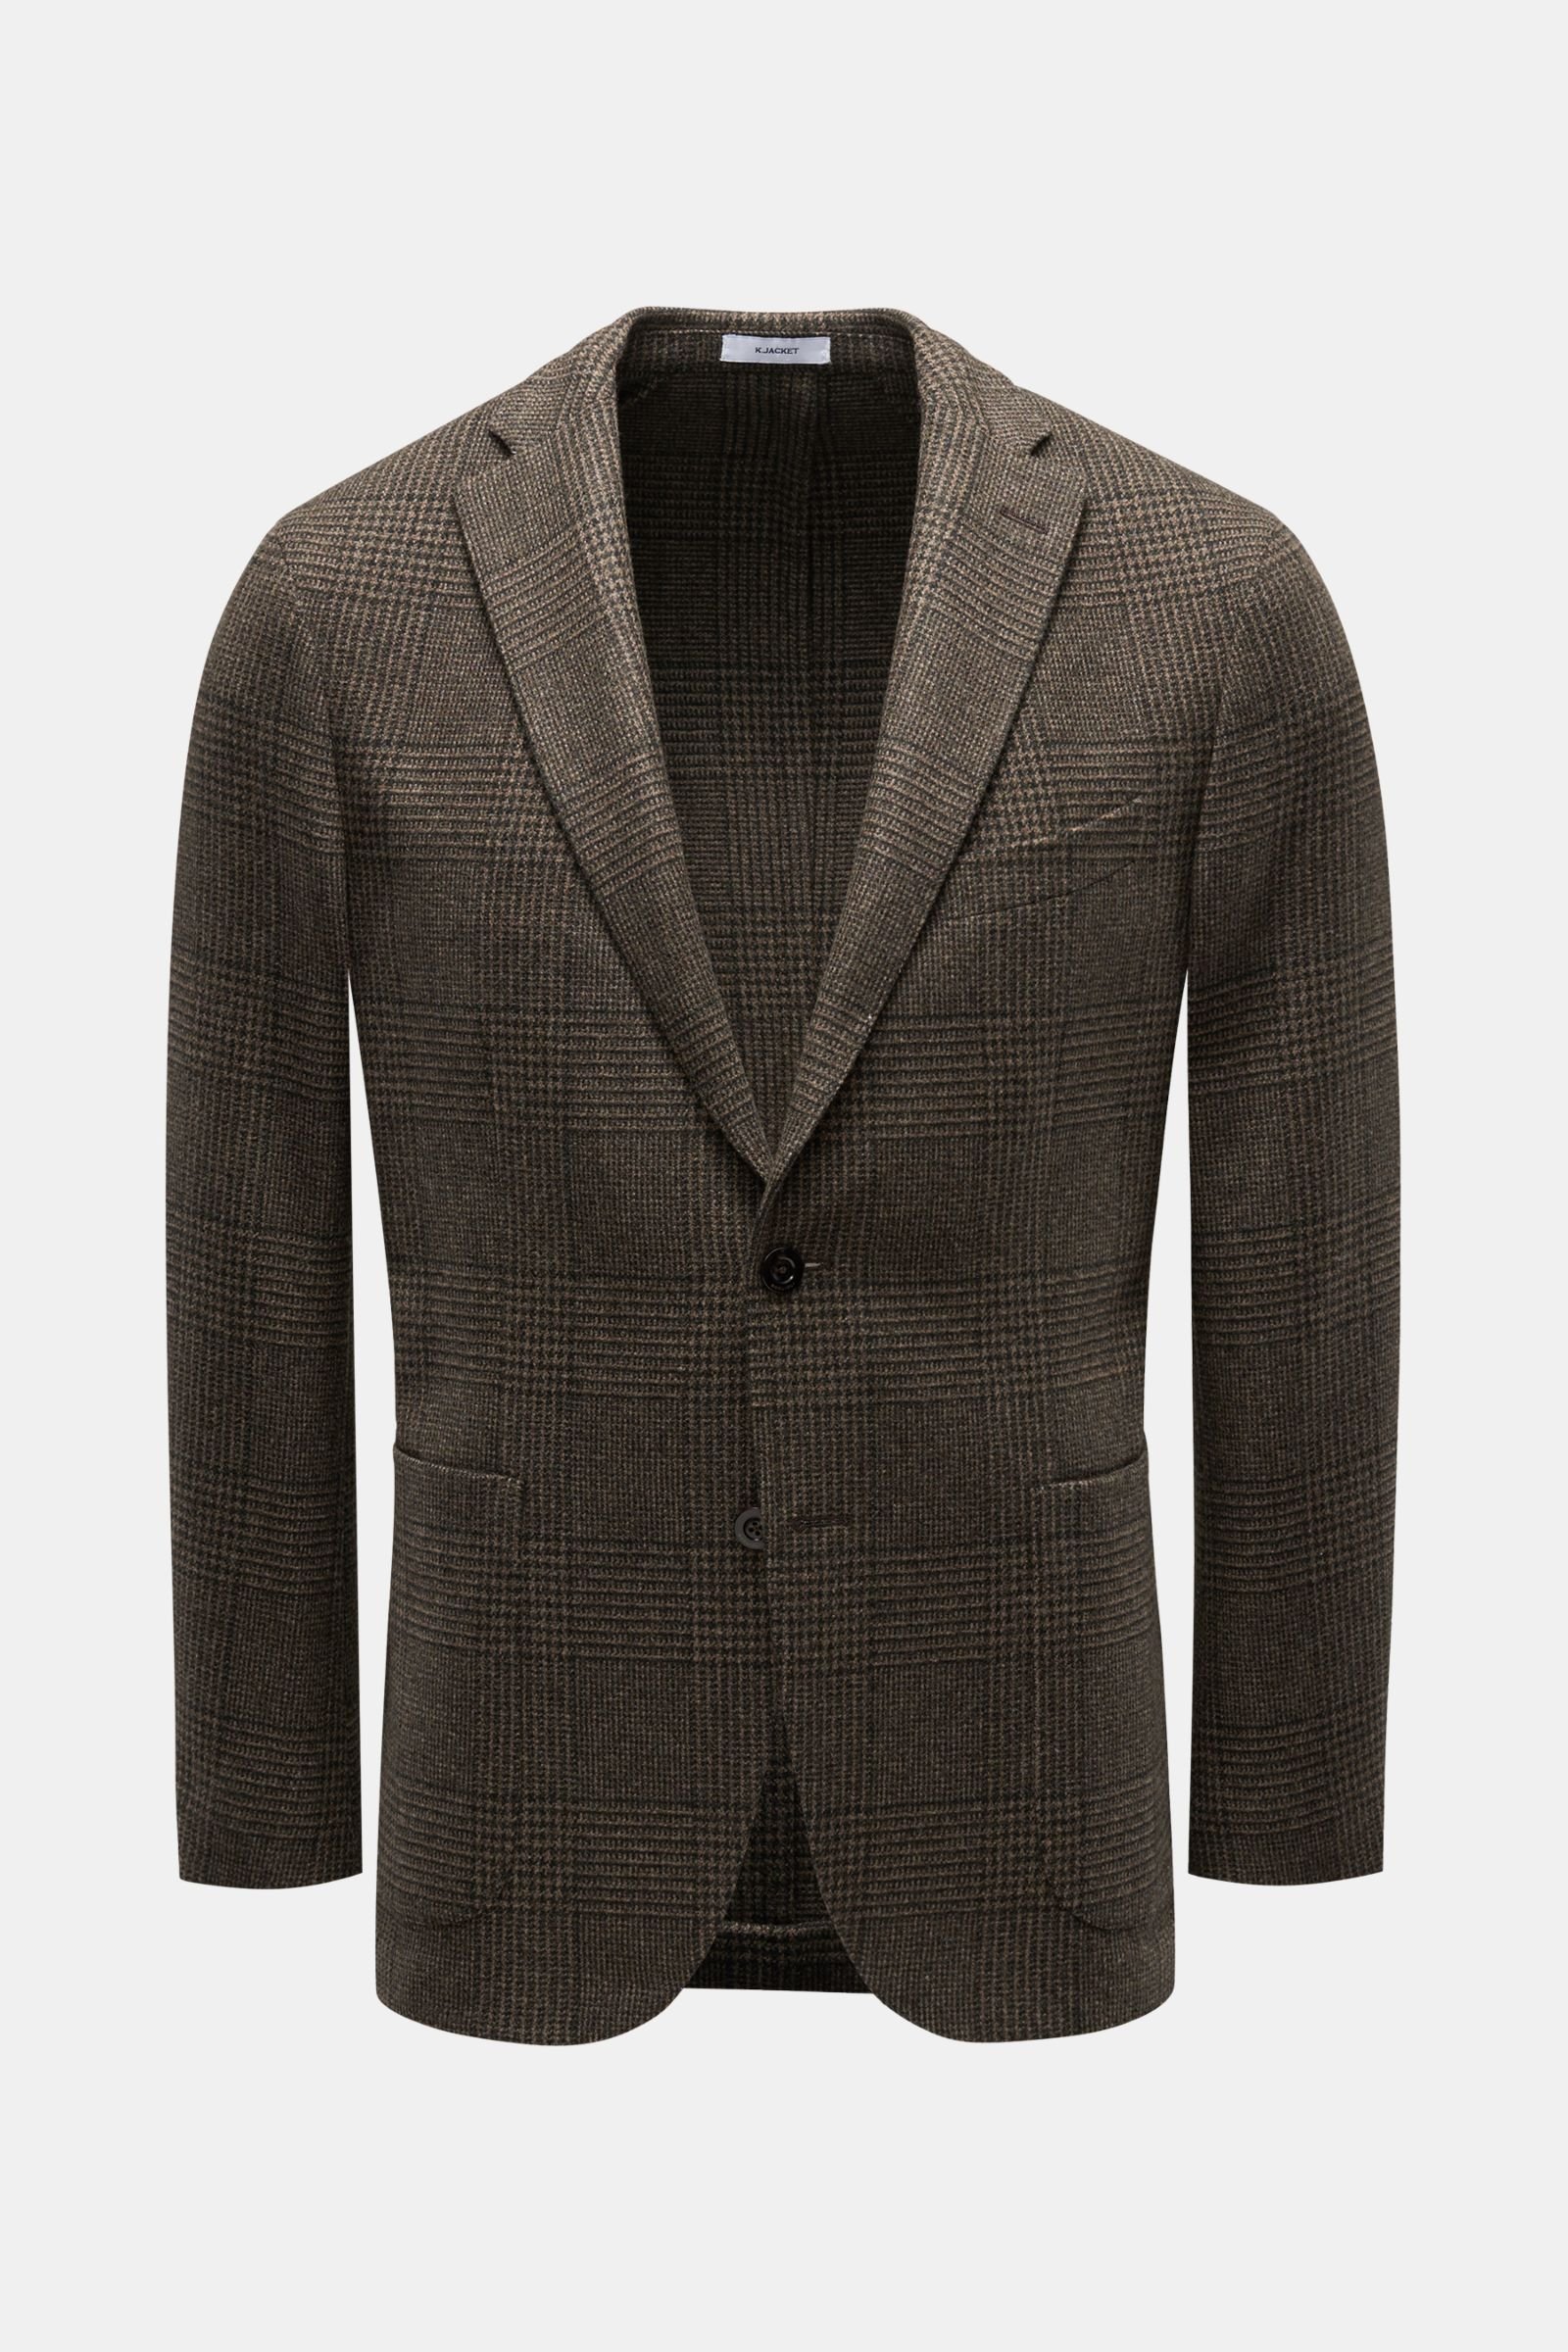 Smart-casual jacket 'K. Jacket' brown/black checked